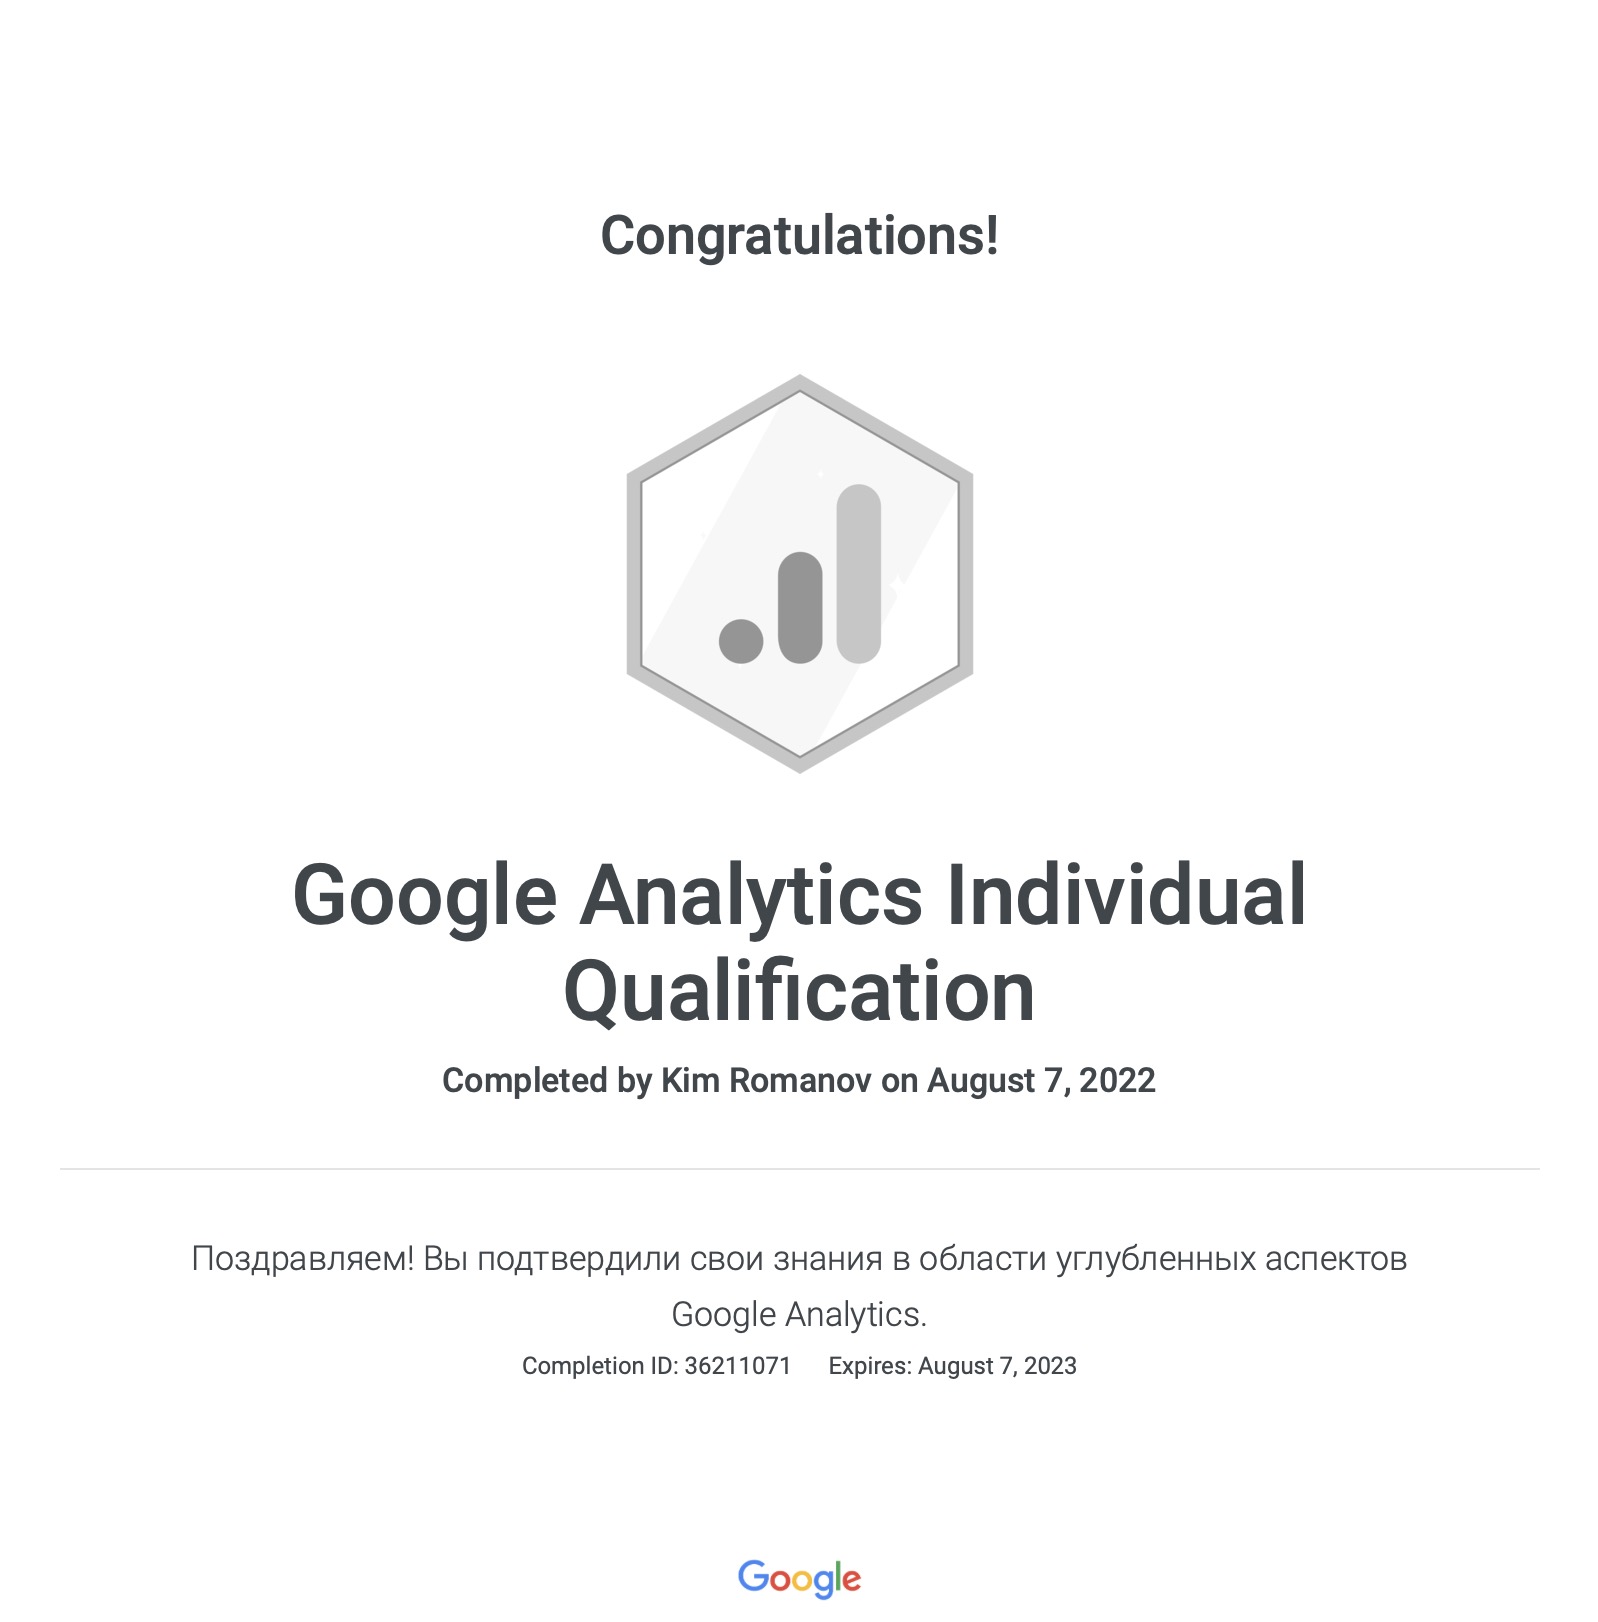 Google Analytics Individual Qualification for Kim Romanov